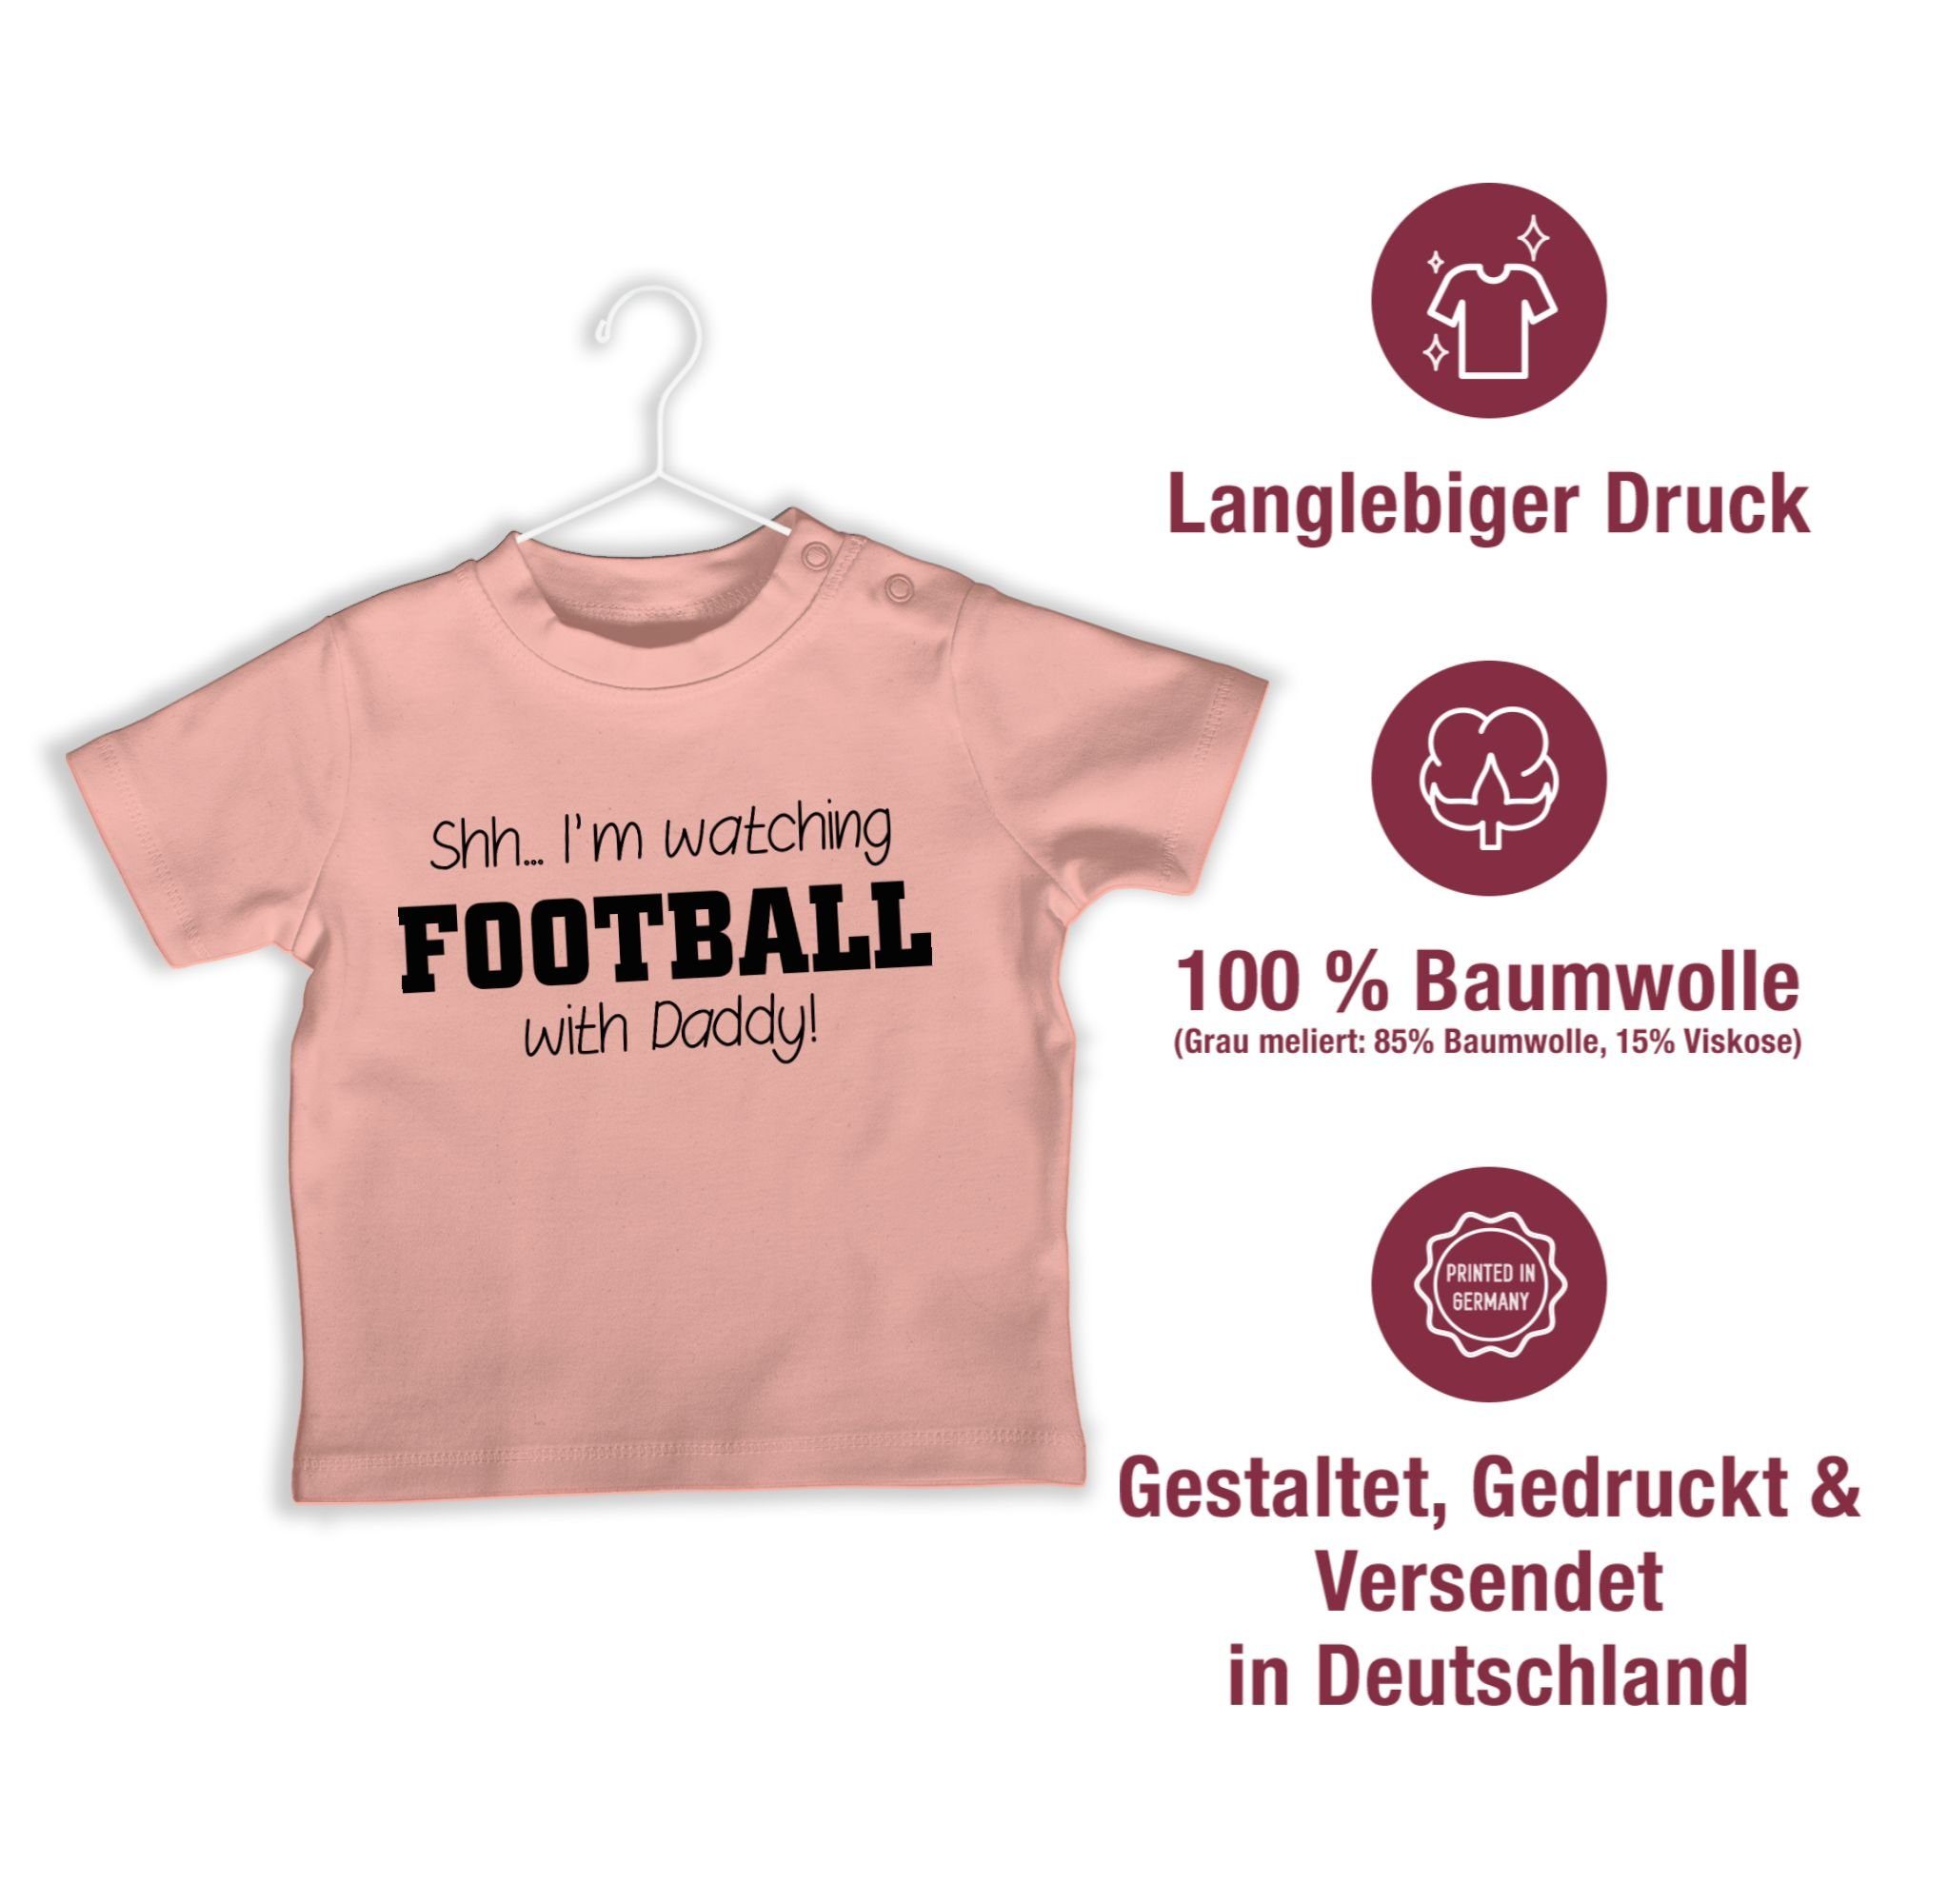 Daddy! Shh...I'm Baby 3 - T-Shirt watching Bewegung Shirtracer Babyrosa with & football schwarz Sport